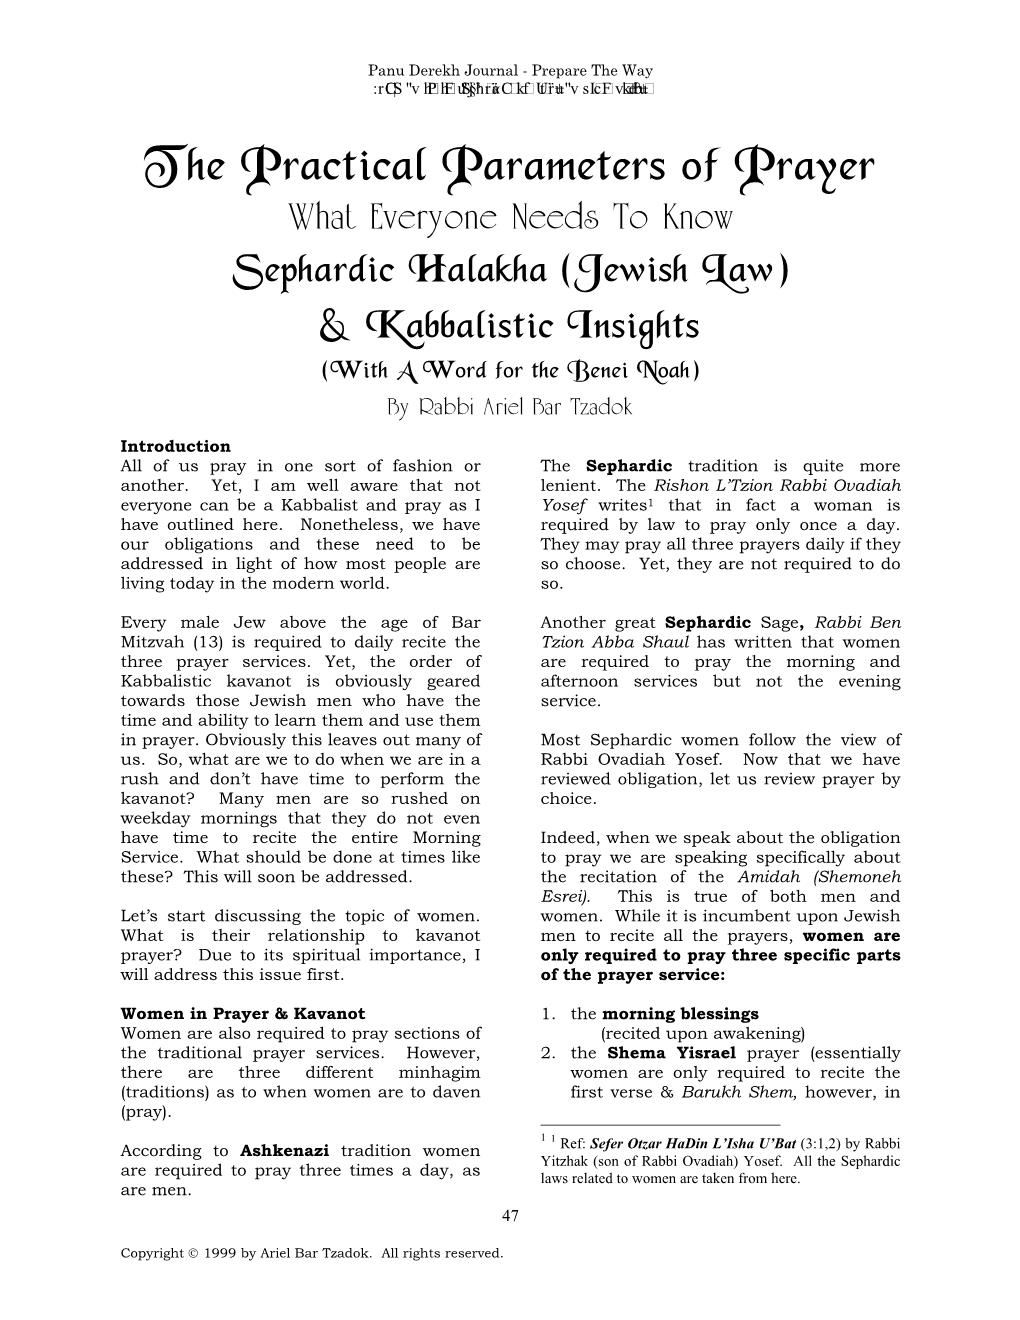 The Practical Parameters of Prayer